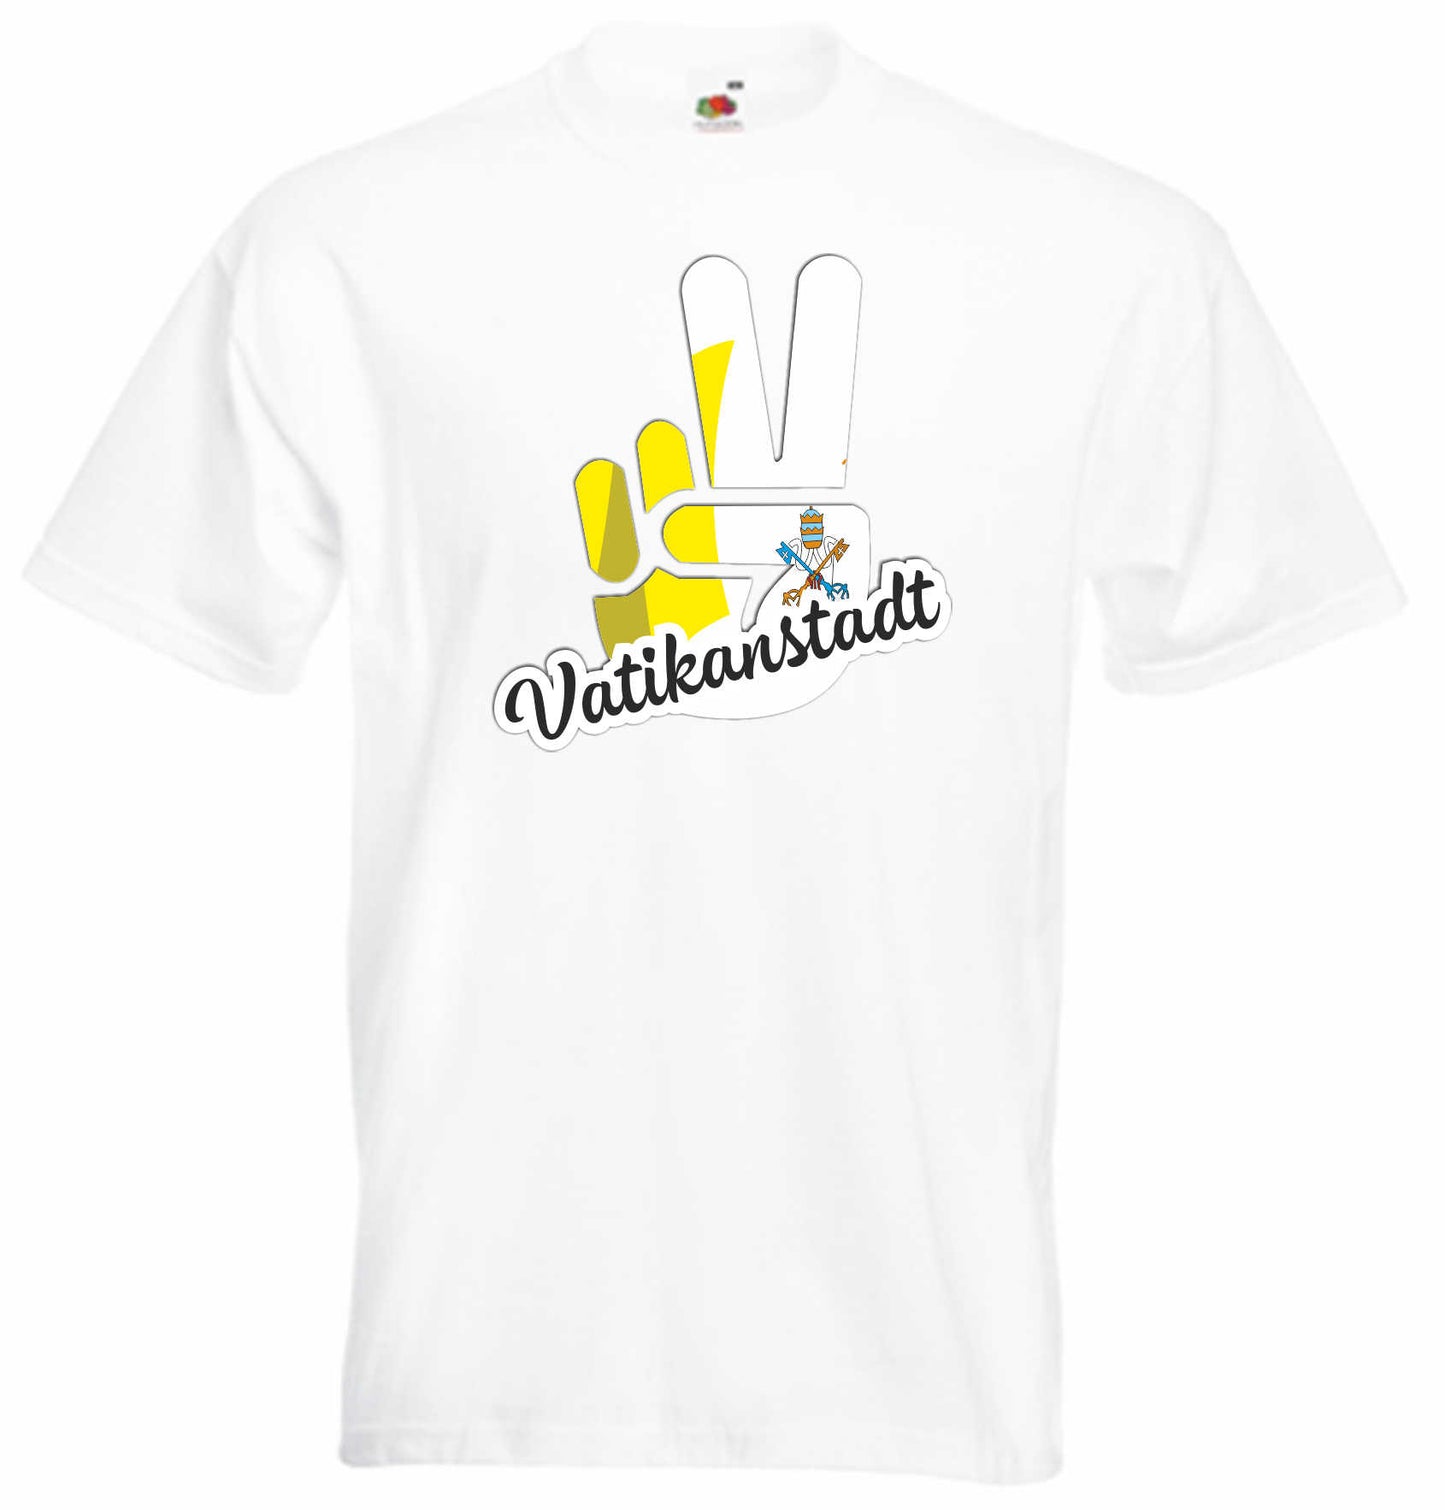 T-Shirt Herren - Victory - Flagge / Fahne - Vatikanstadt - Sieg